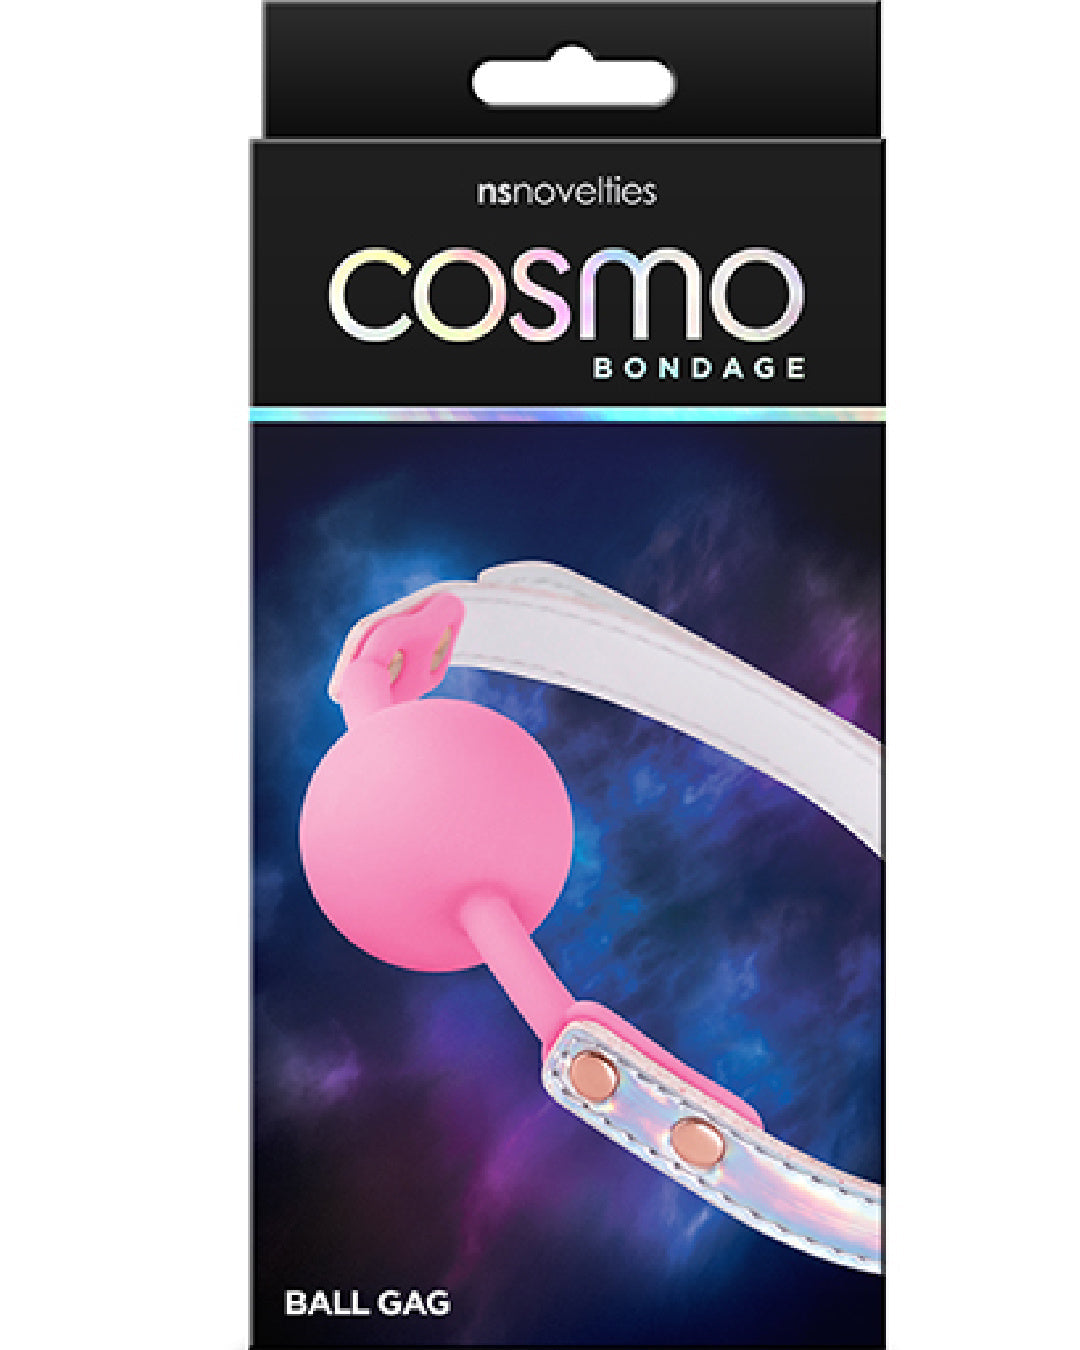 Cosmo Bondage Holographic Ball Gag product box 